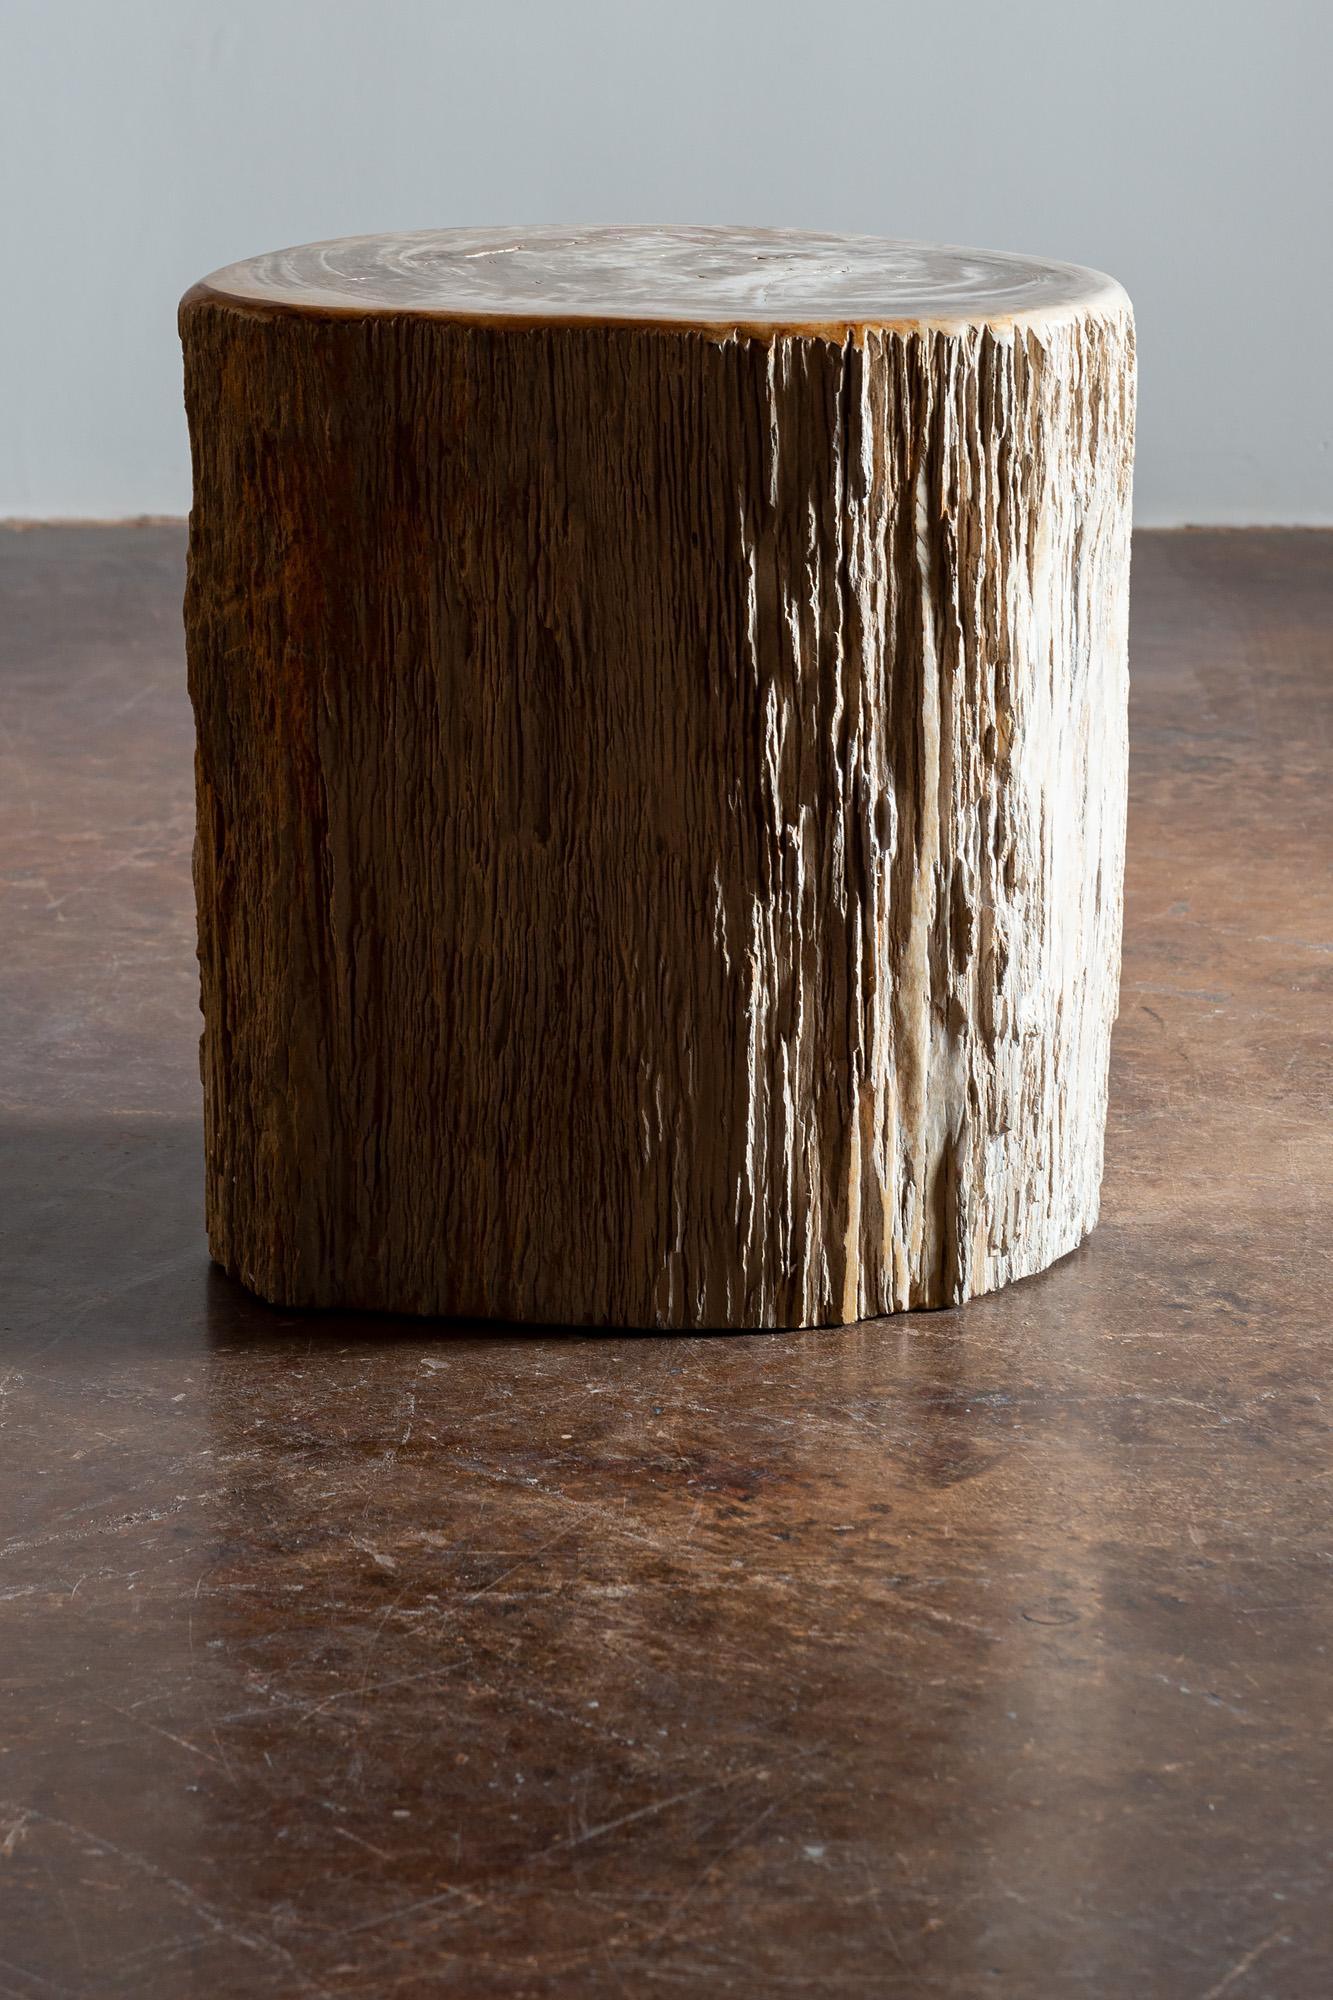 petrified wood stump for sale